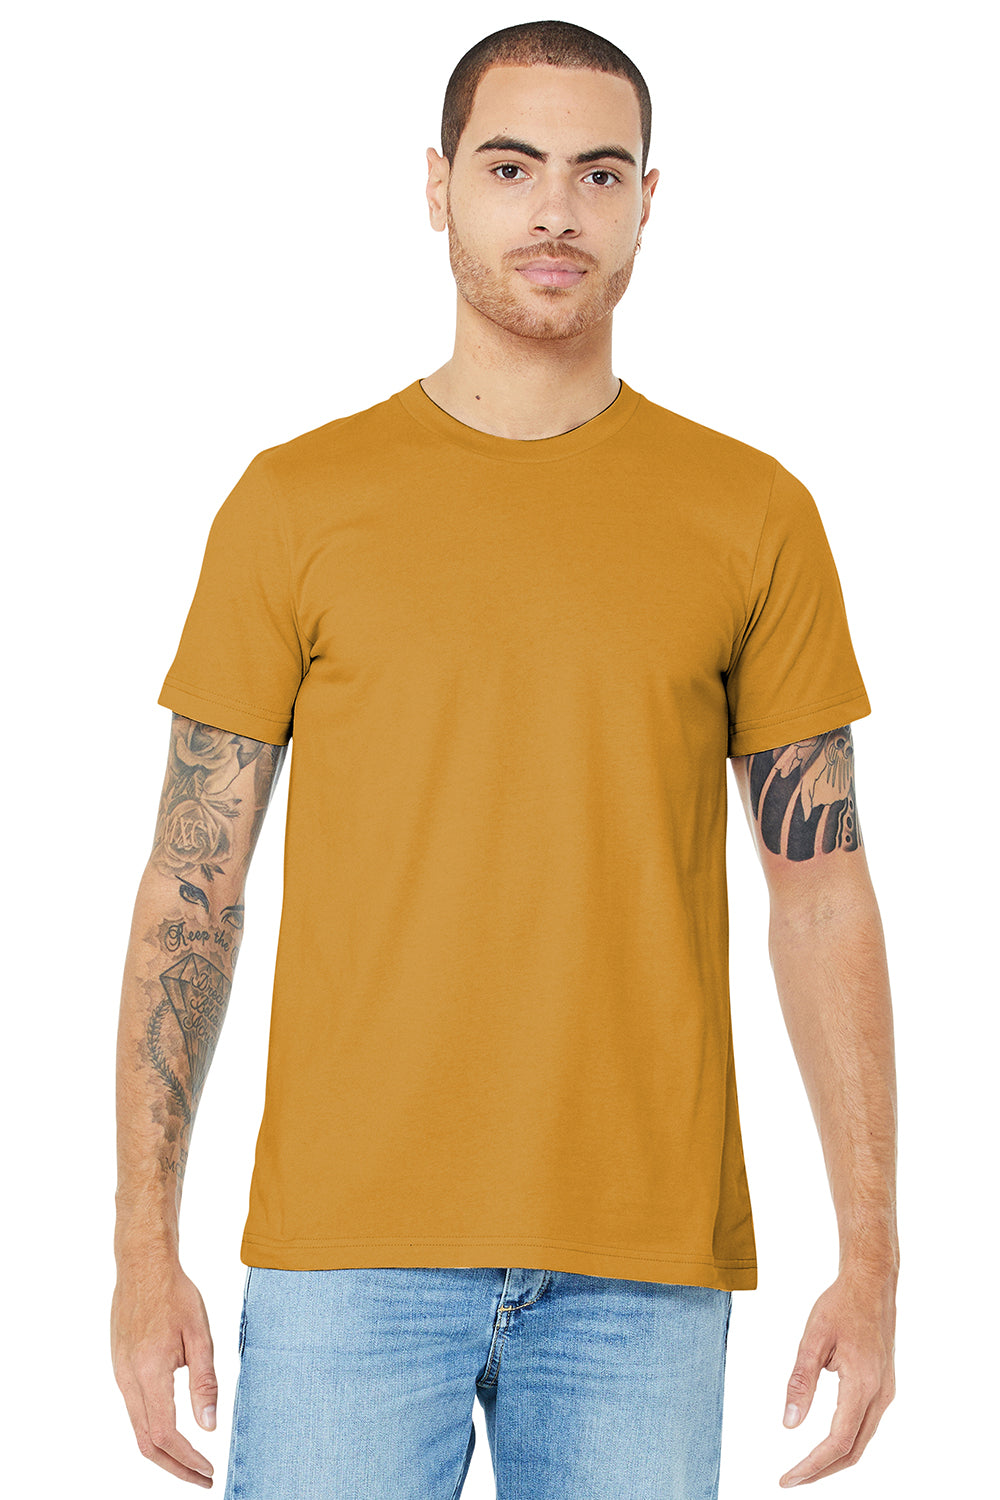 Bella + Canvas BC3001/3001C Mens Jersey Short Sleeve Crewneck T-Shirt Mustard Yellow Model Front